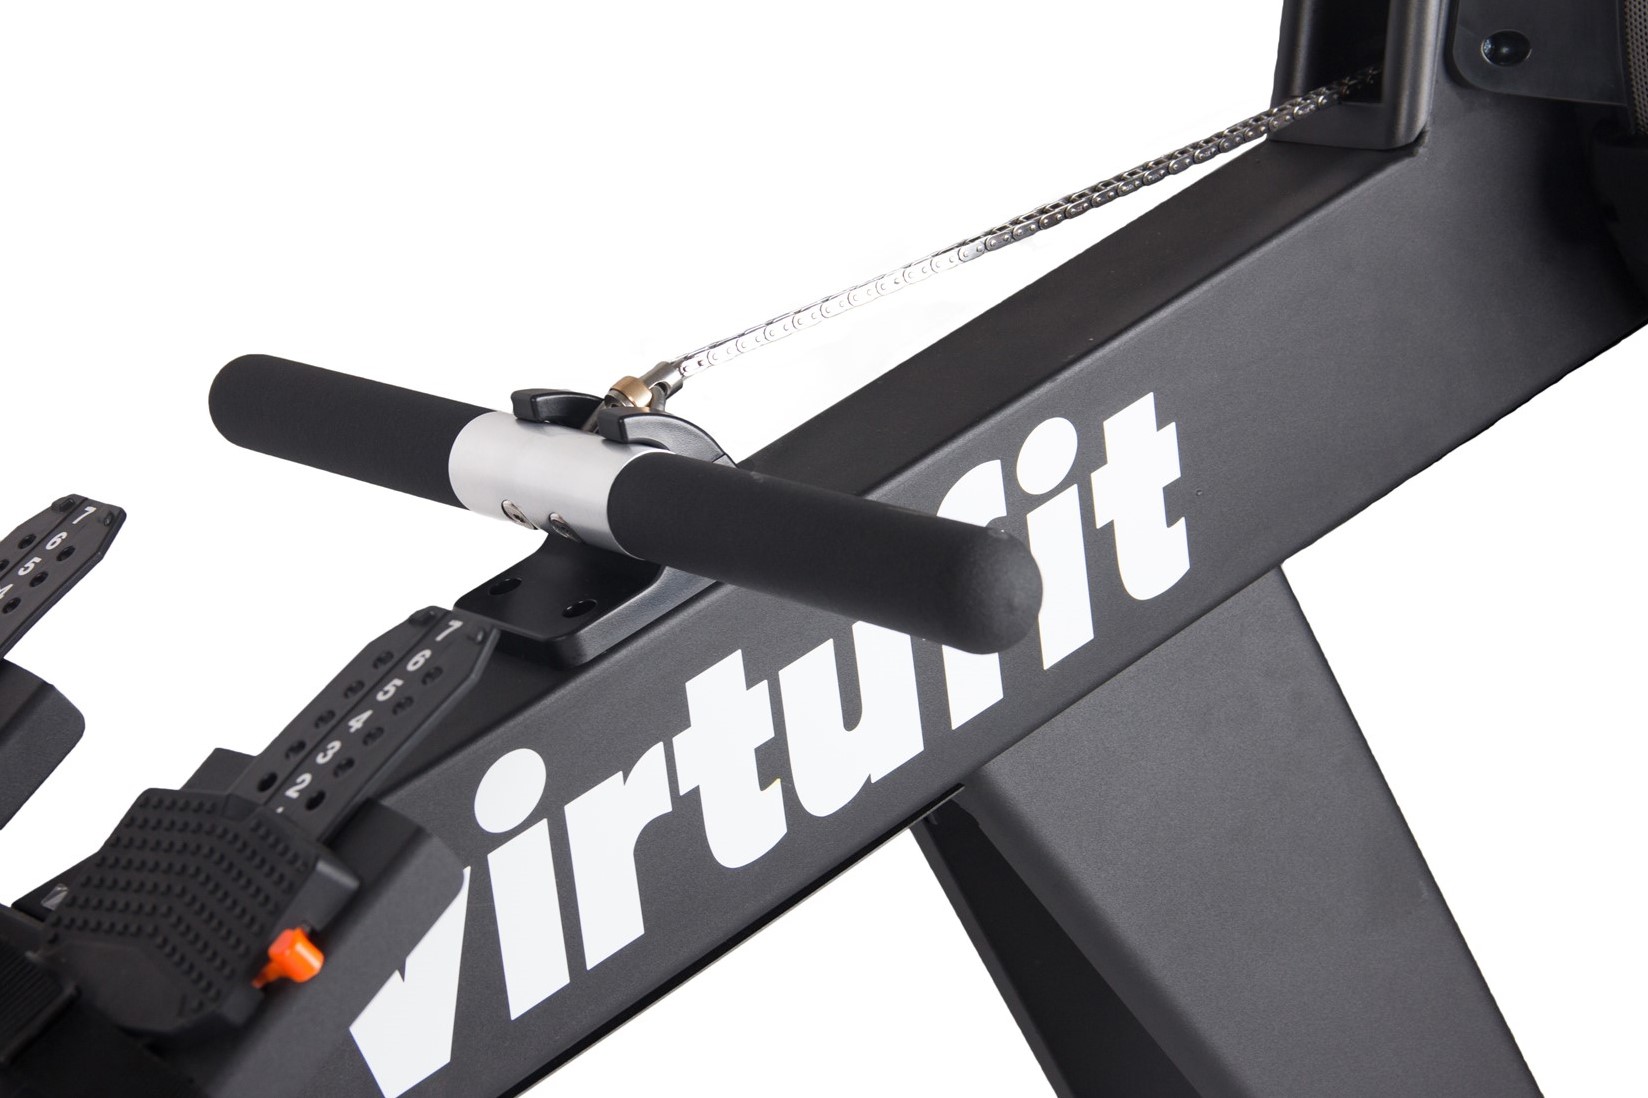 Rechthoek Onbevredigend Tien VirtuFit Ultimate Pro 2i Roeitrainer Bluetooth/ANT+ - Gratis  trainingsschema | Fitwinkel.nl